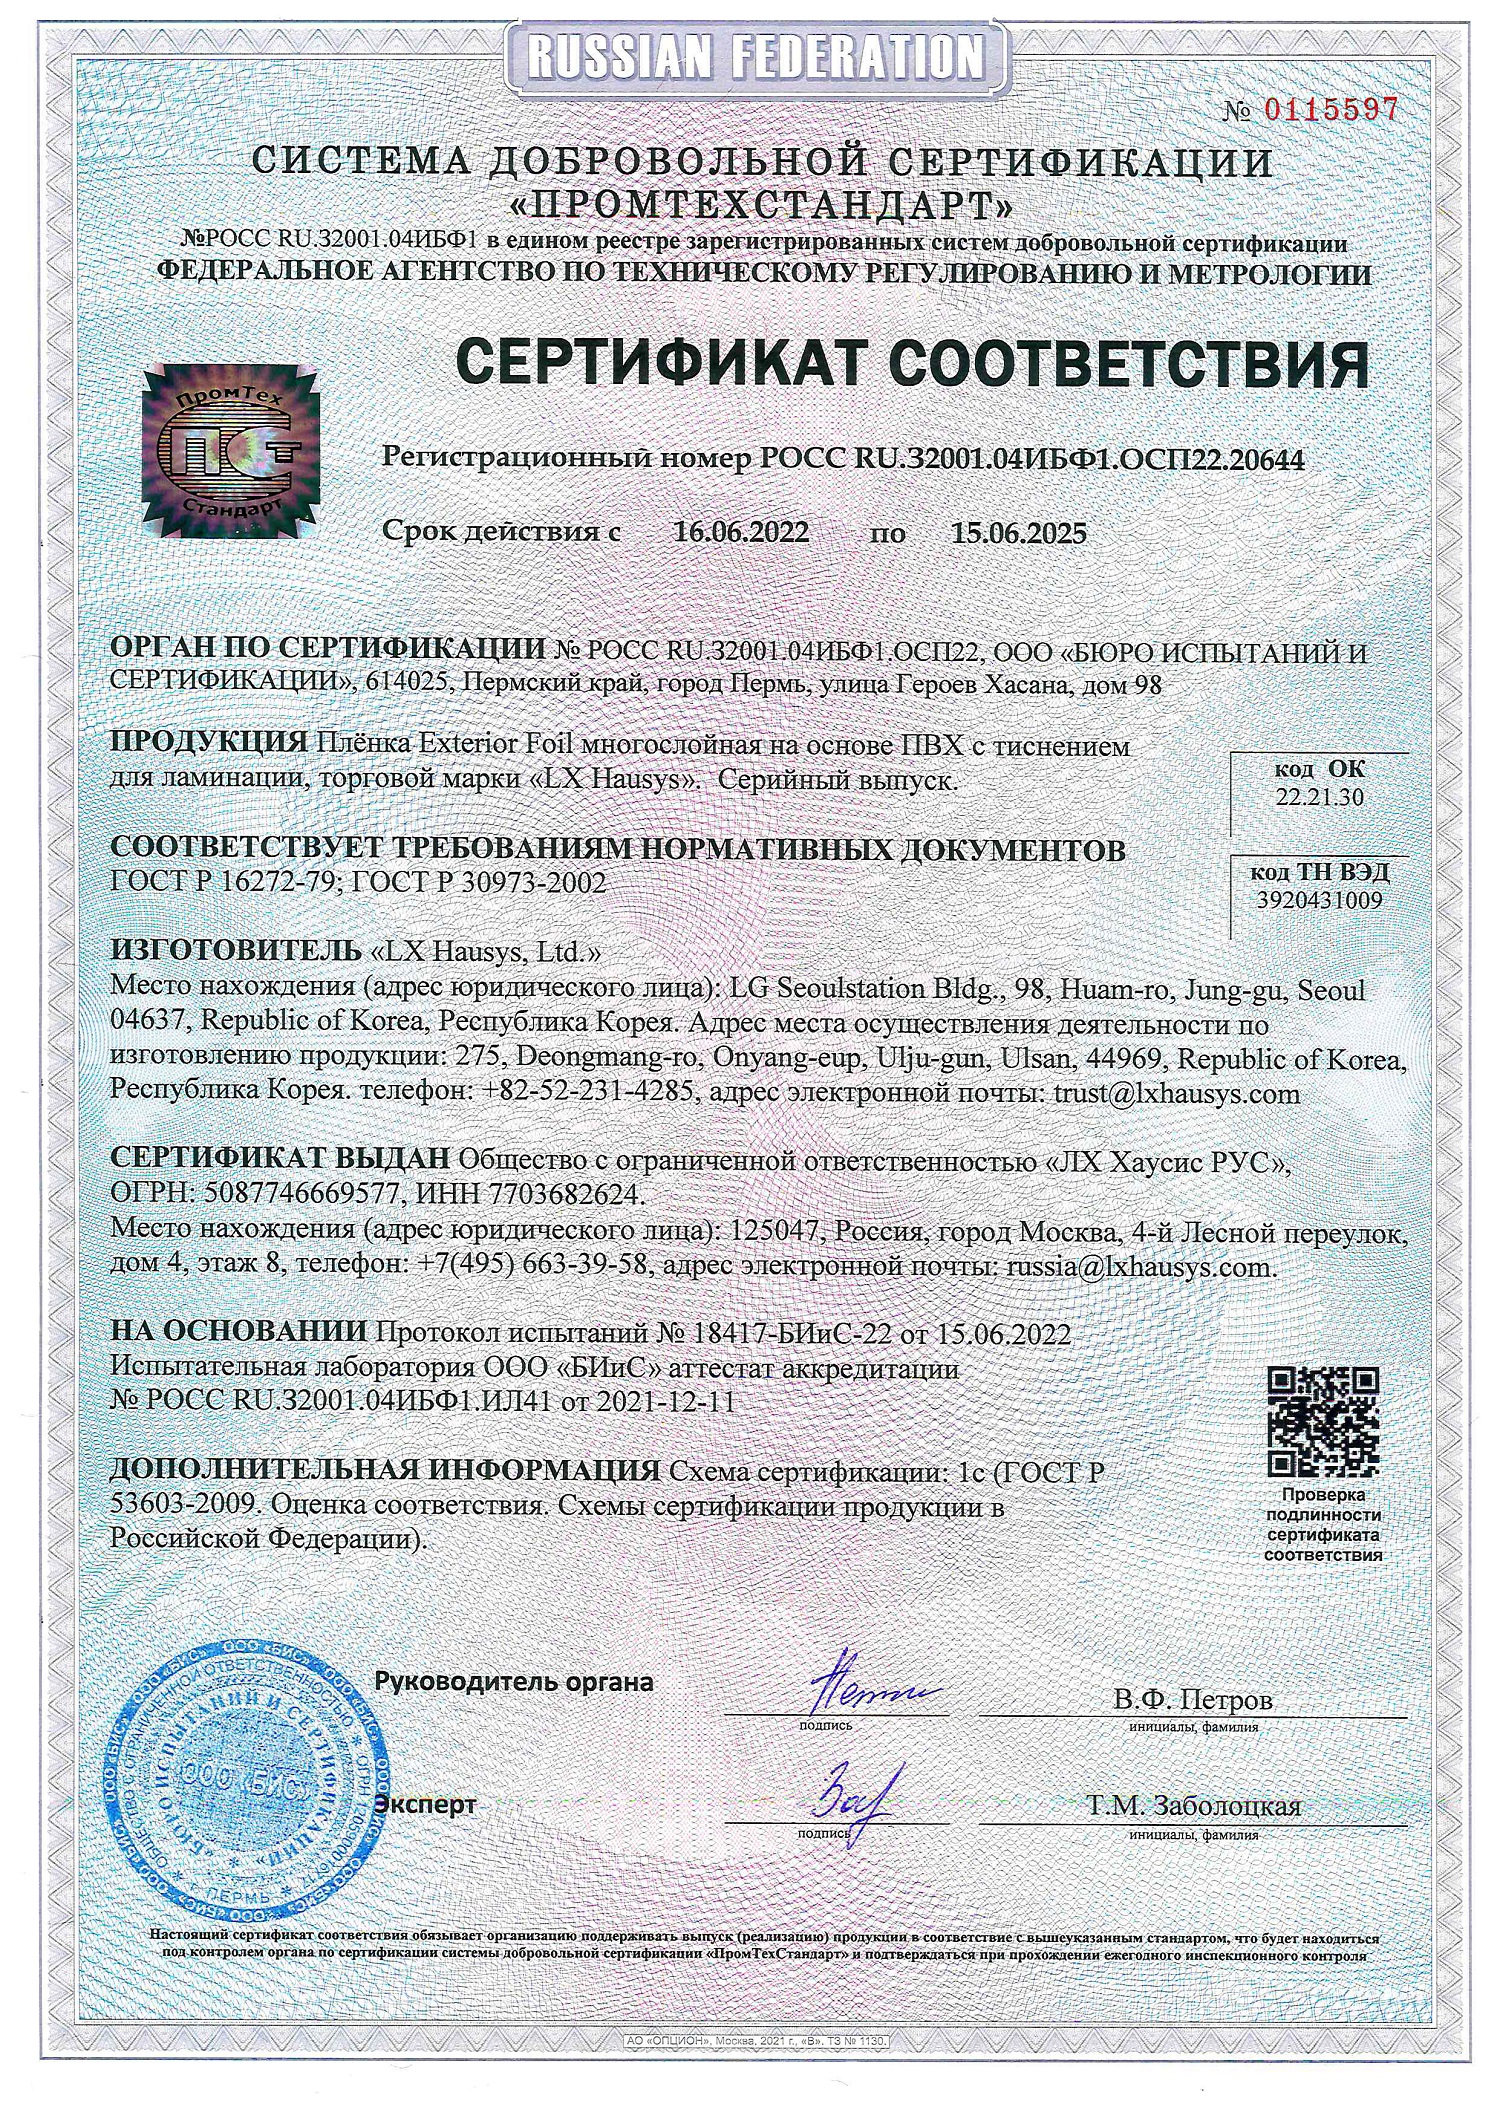 Сертификат ГОСТ Ех Foil LХ Hausys -15.06.2025